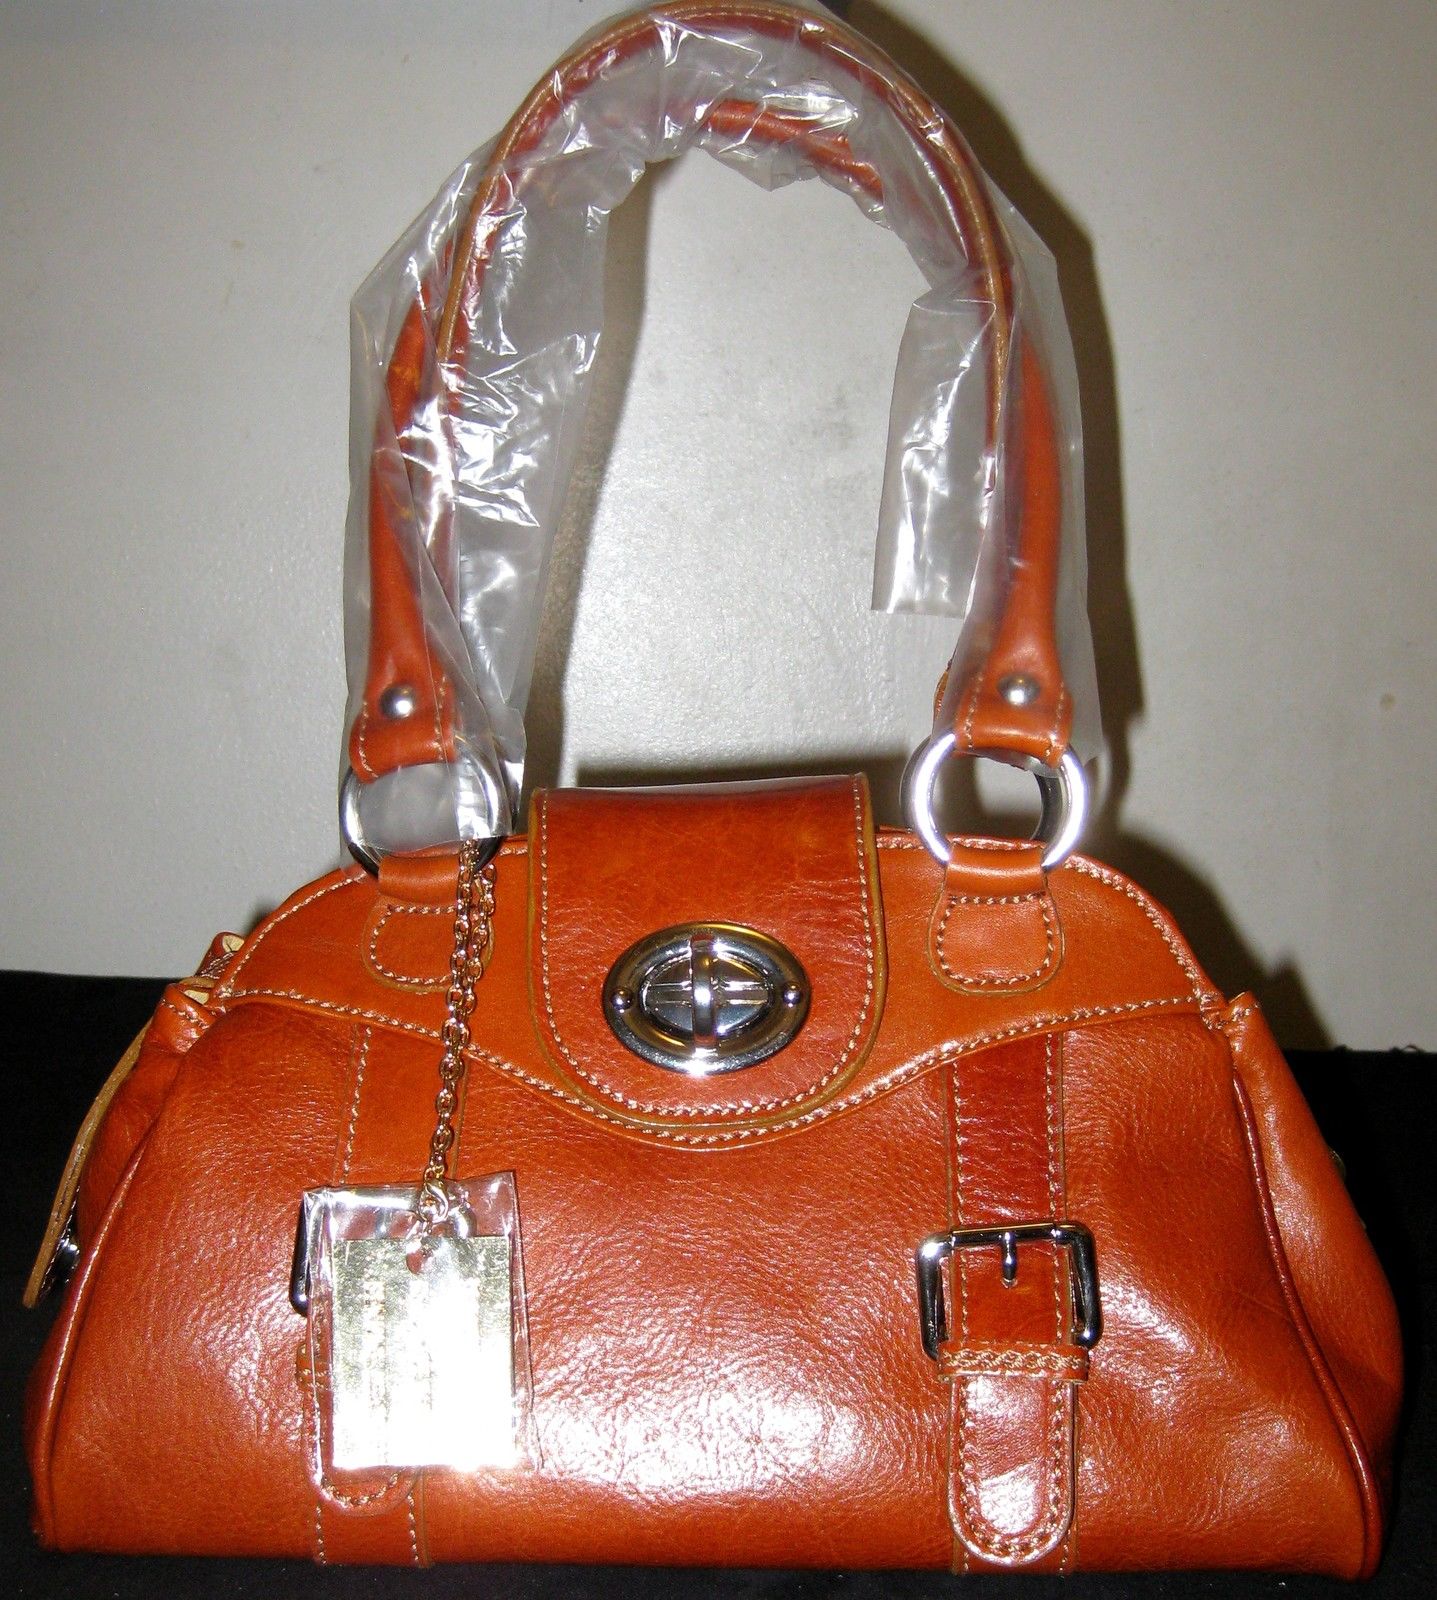 100% Italy Leather Shoulder Bags-Tower Bridge Handbags Orange Color.